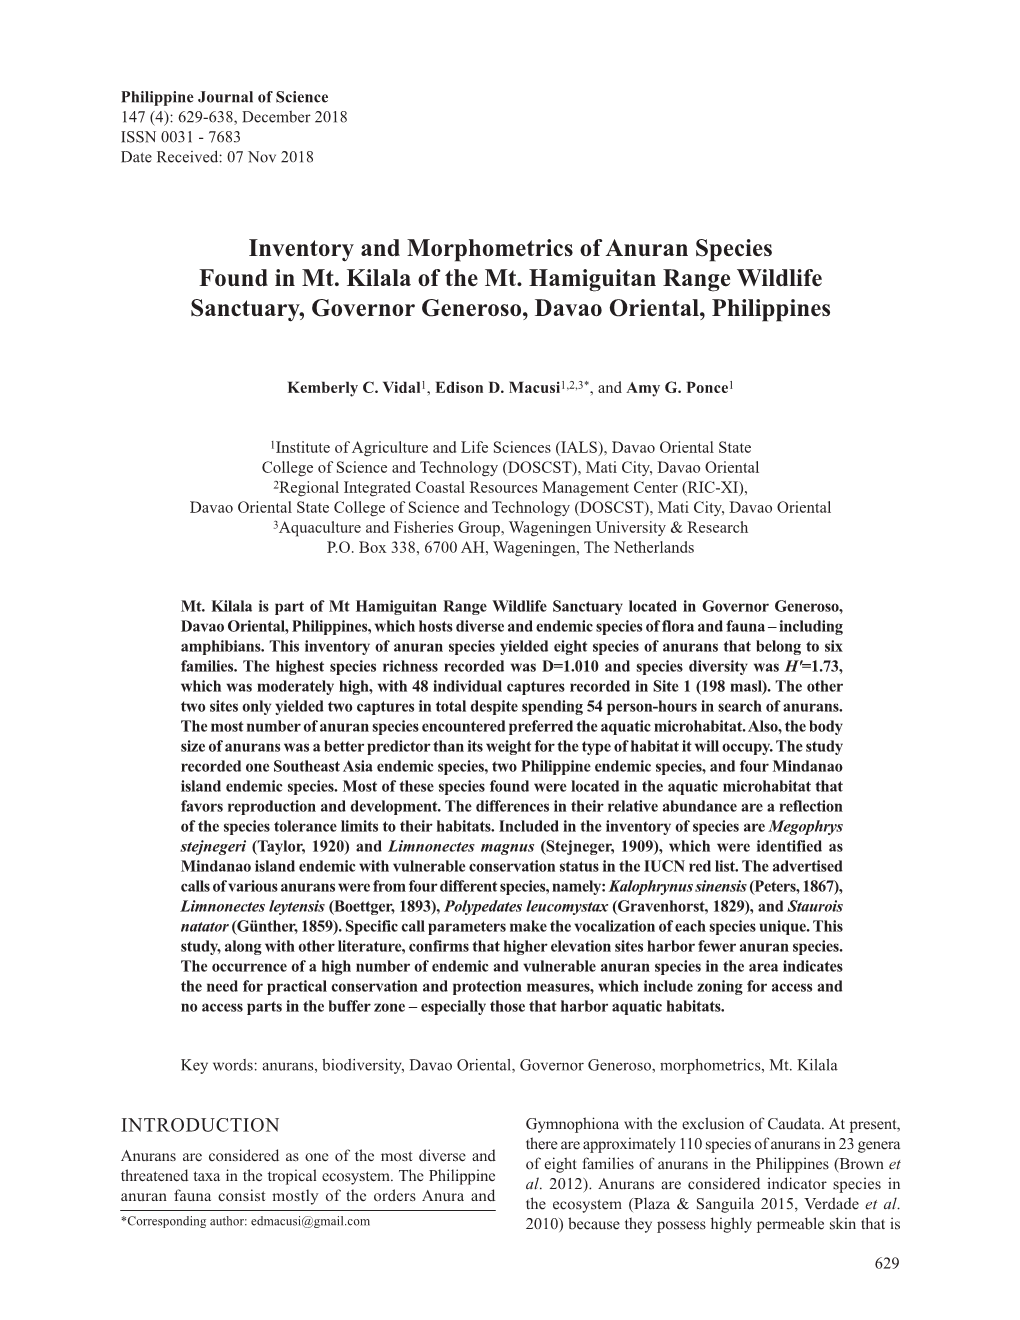 Inventory and Morphometrics of Anuran Species Found in Mt. Kilala of the Mt. Hamiguitan Range Wildlife Sanctuary, Governor Generoso, Davao Oriental, Philippines